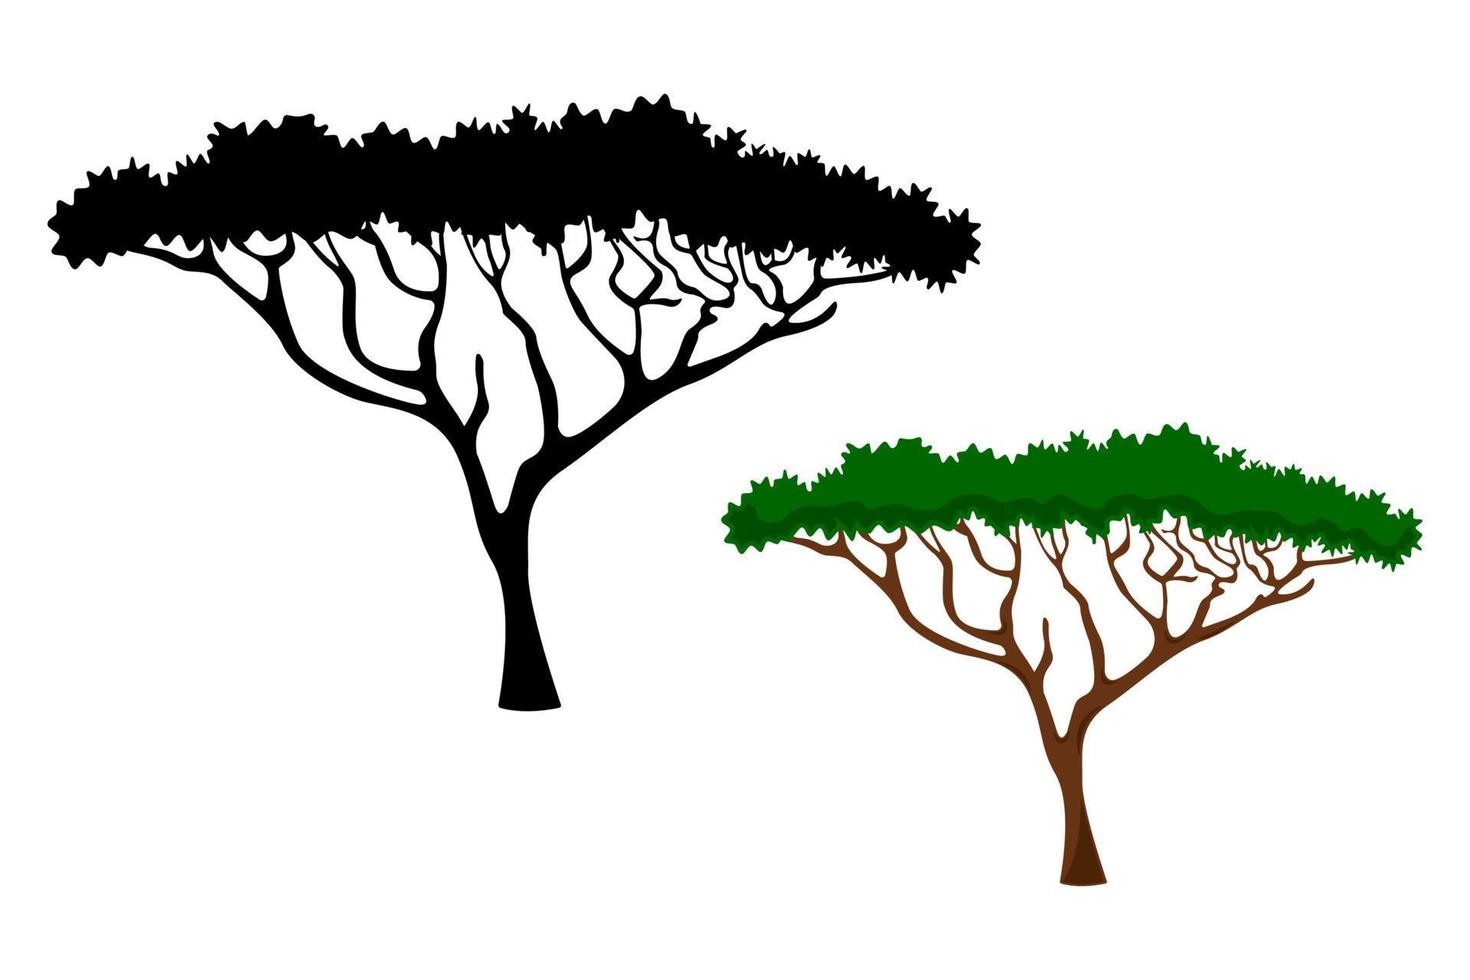 African savanna tree cartoon silhouette isolated white background vector